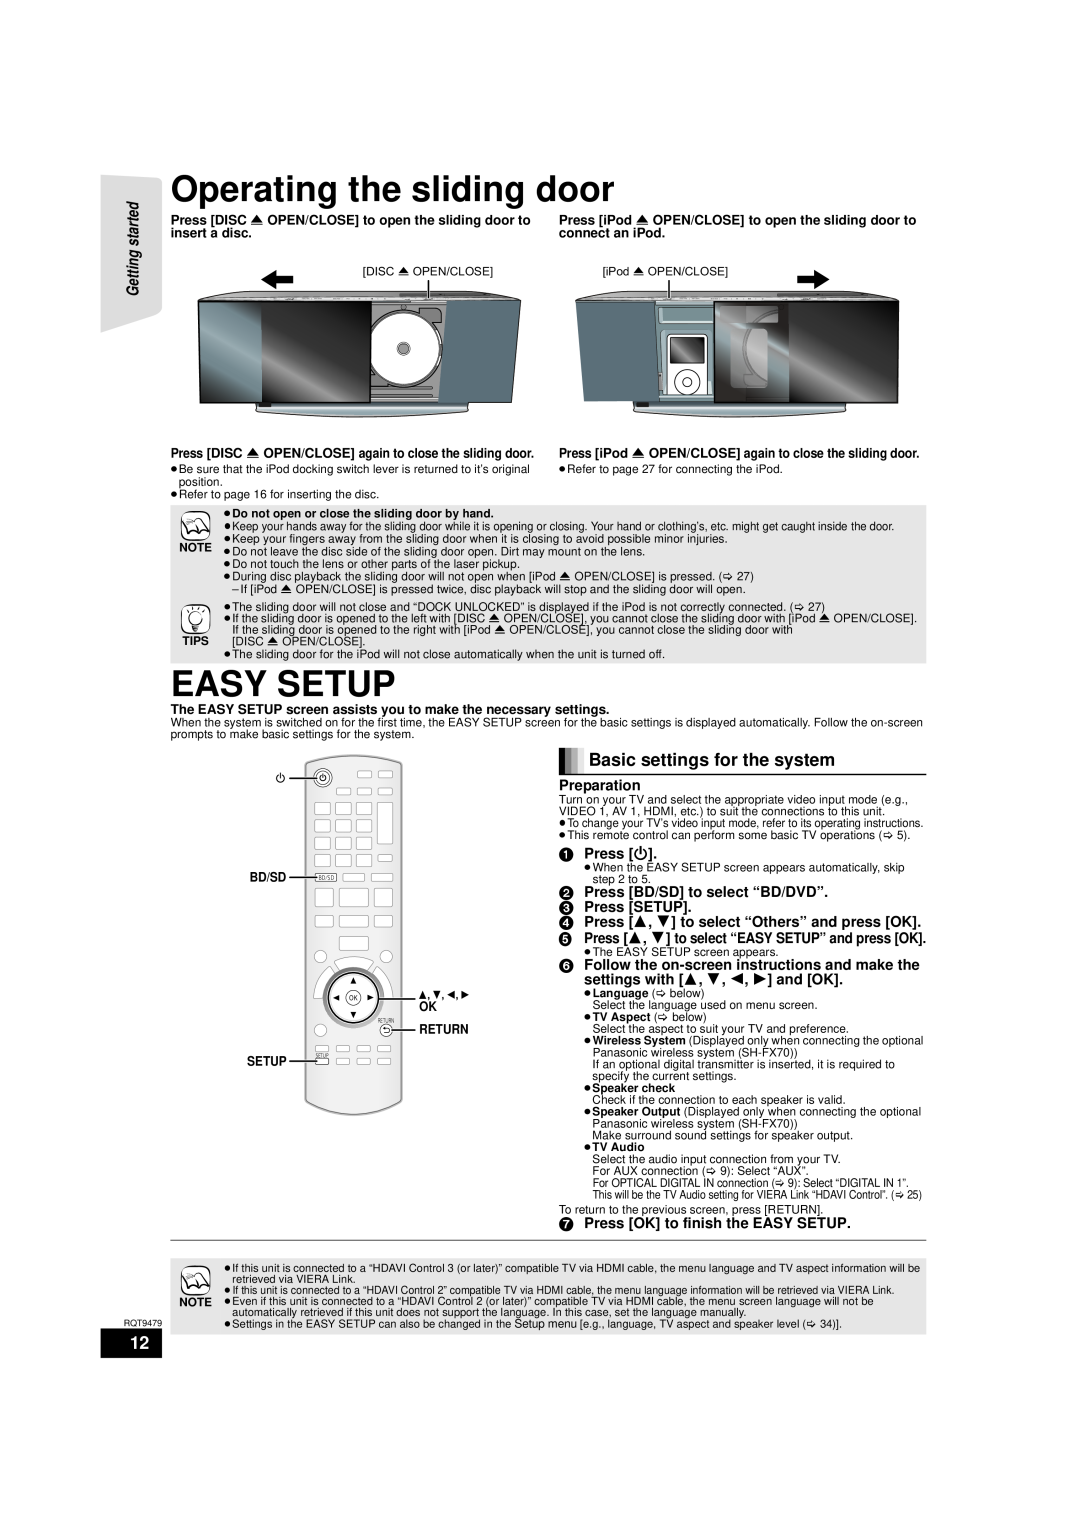 Panasonic SA-BTX70 Operating the sliding door, Easy Setup, Basic settings for the system, Preparation, 1Press Í, Return 